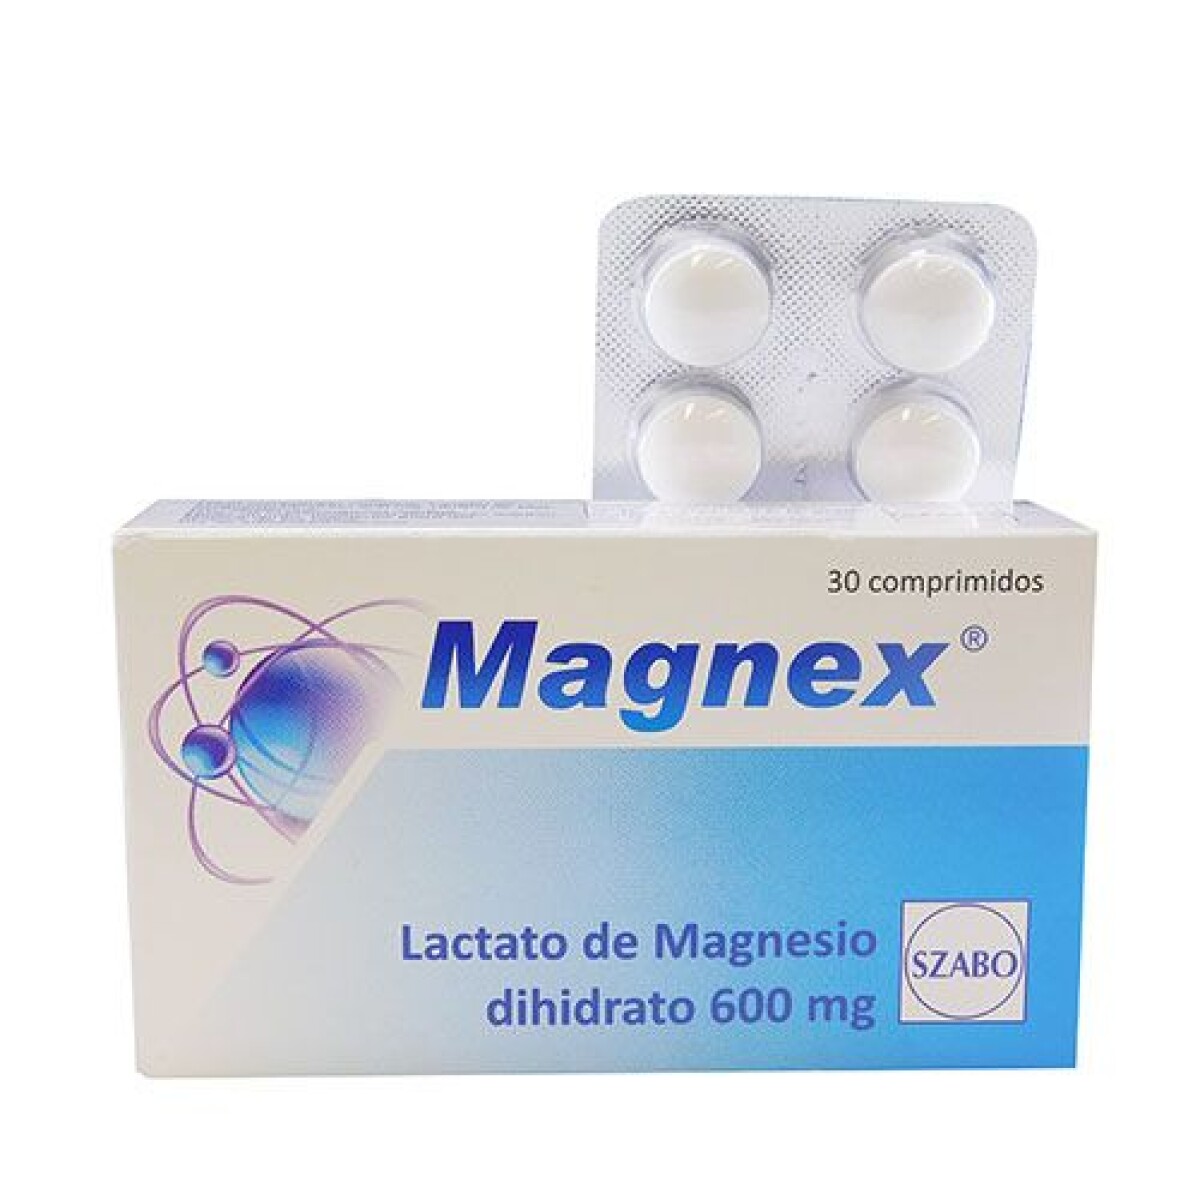 Magnex 30 comprimidos 